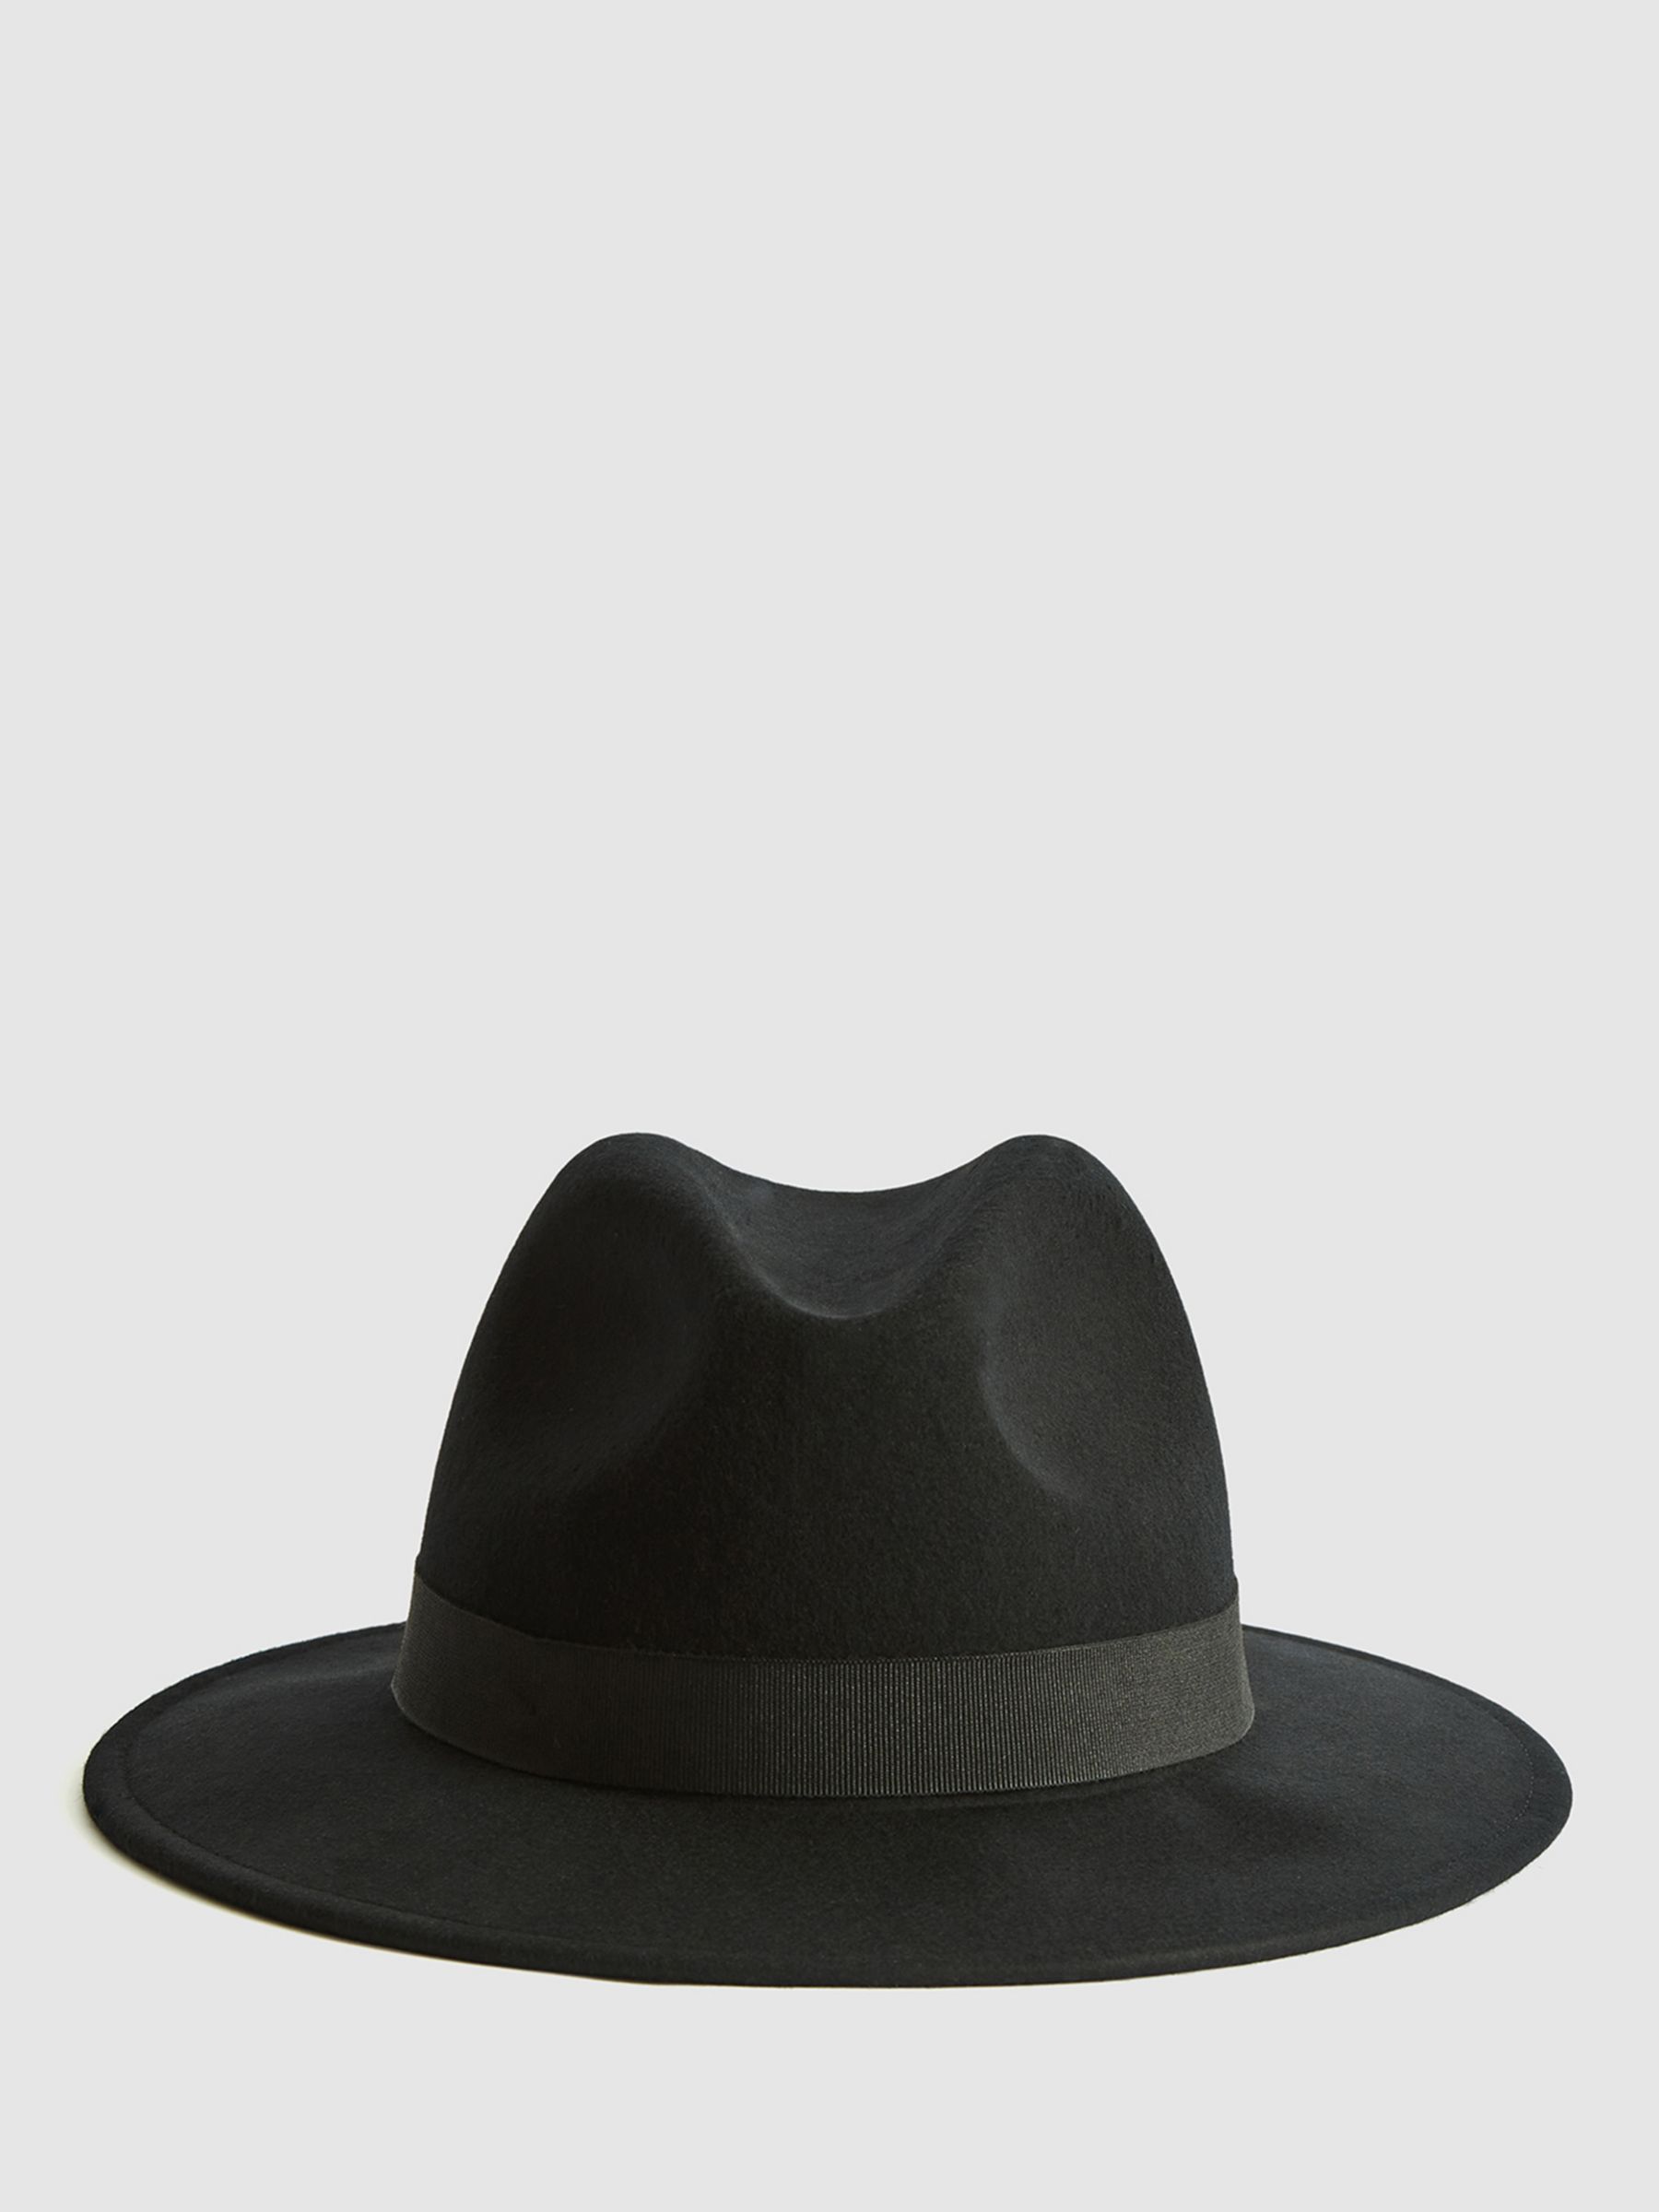 Reiss Ashbourne Wool Fedora Hat, Black, S-M